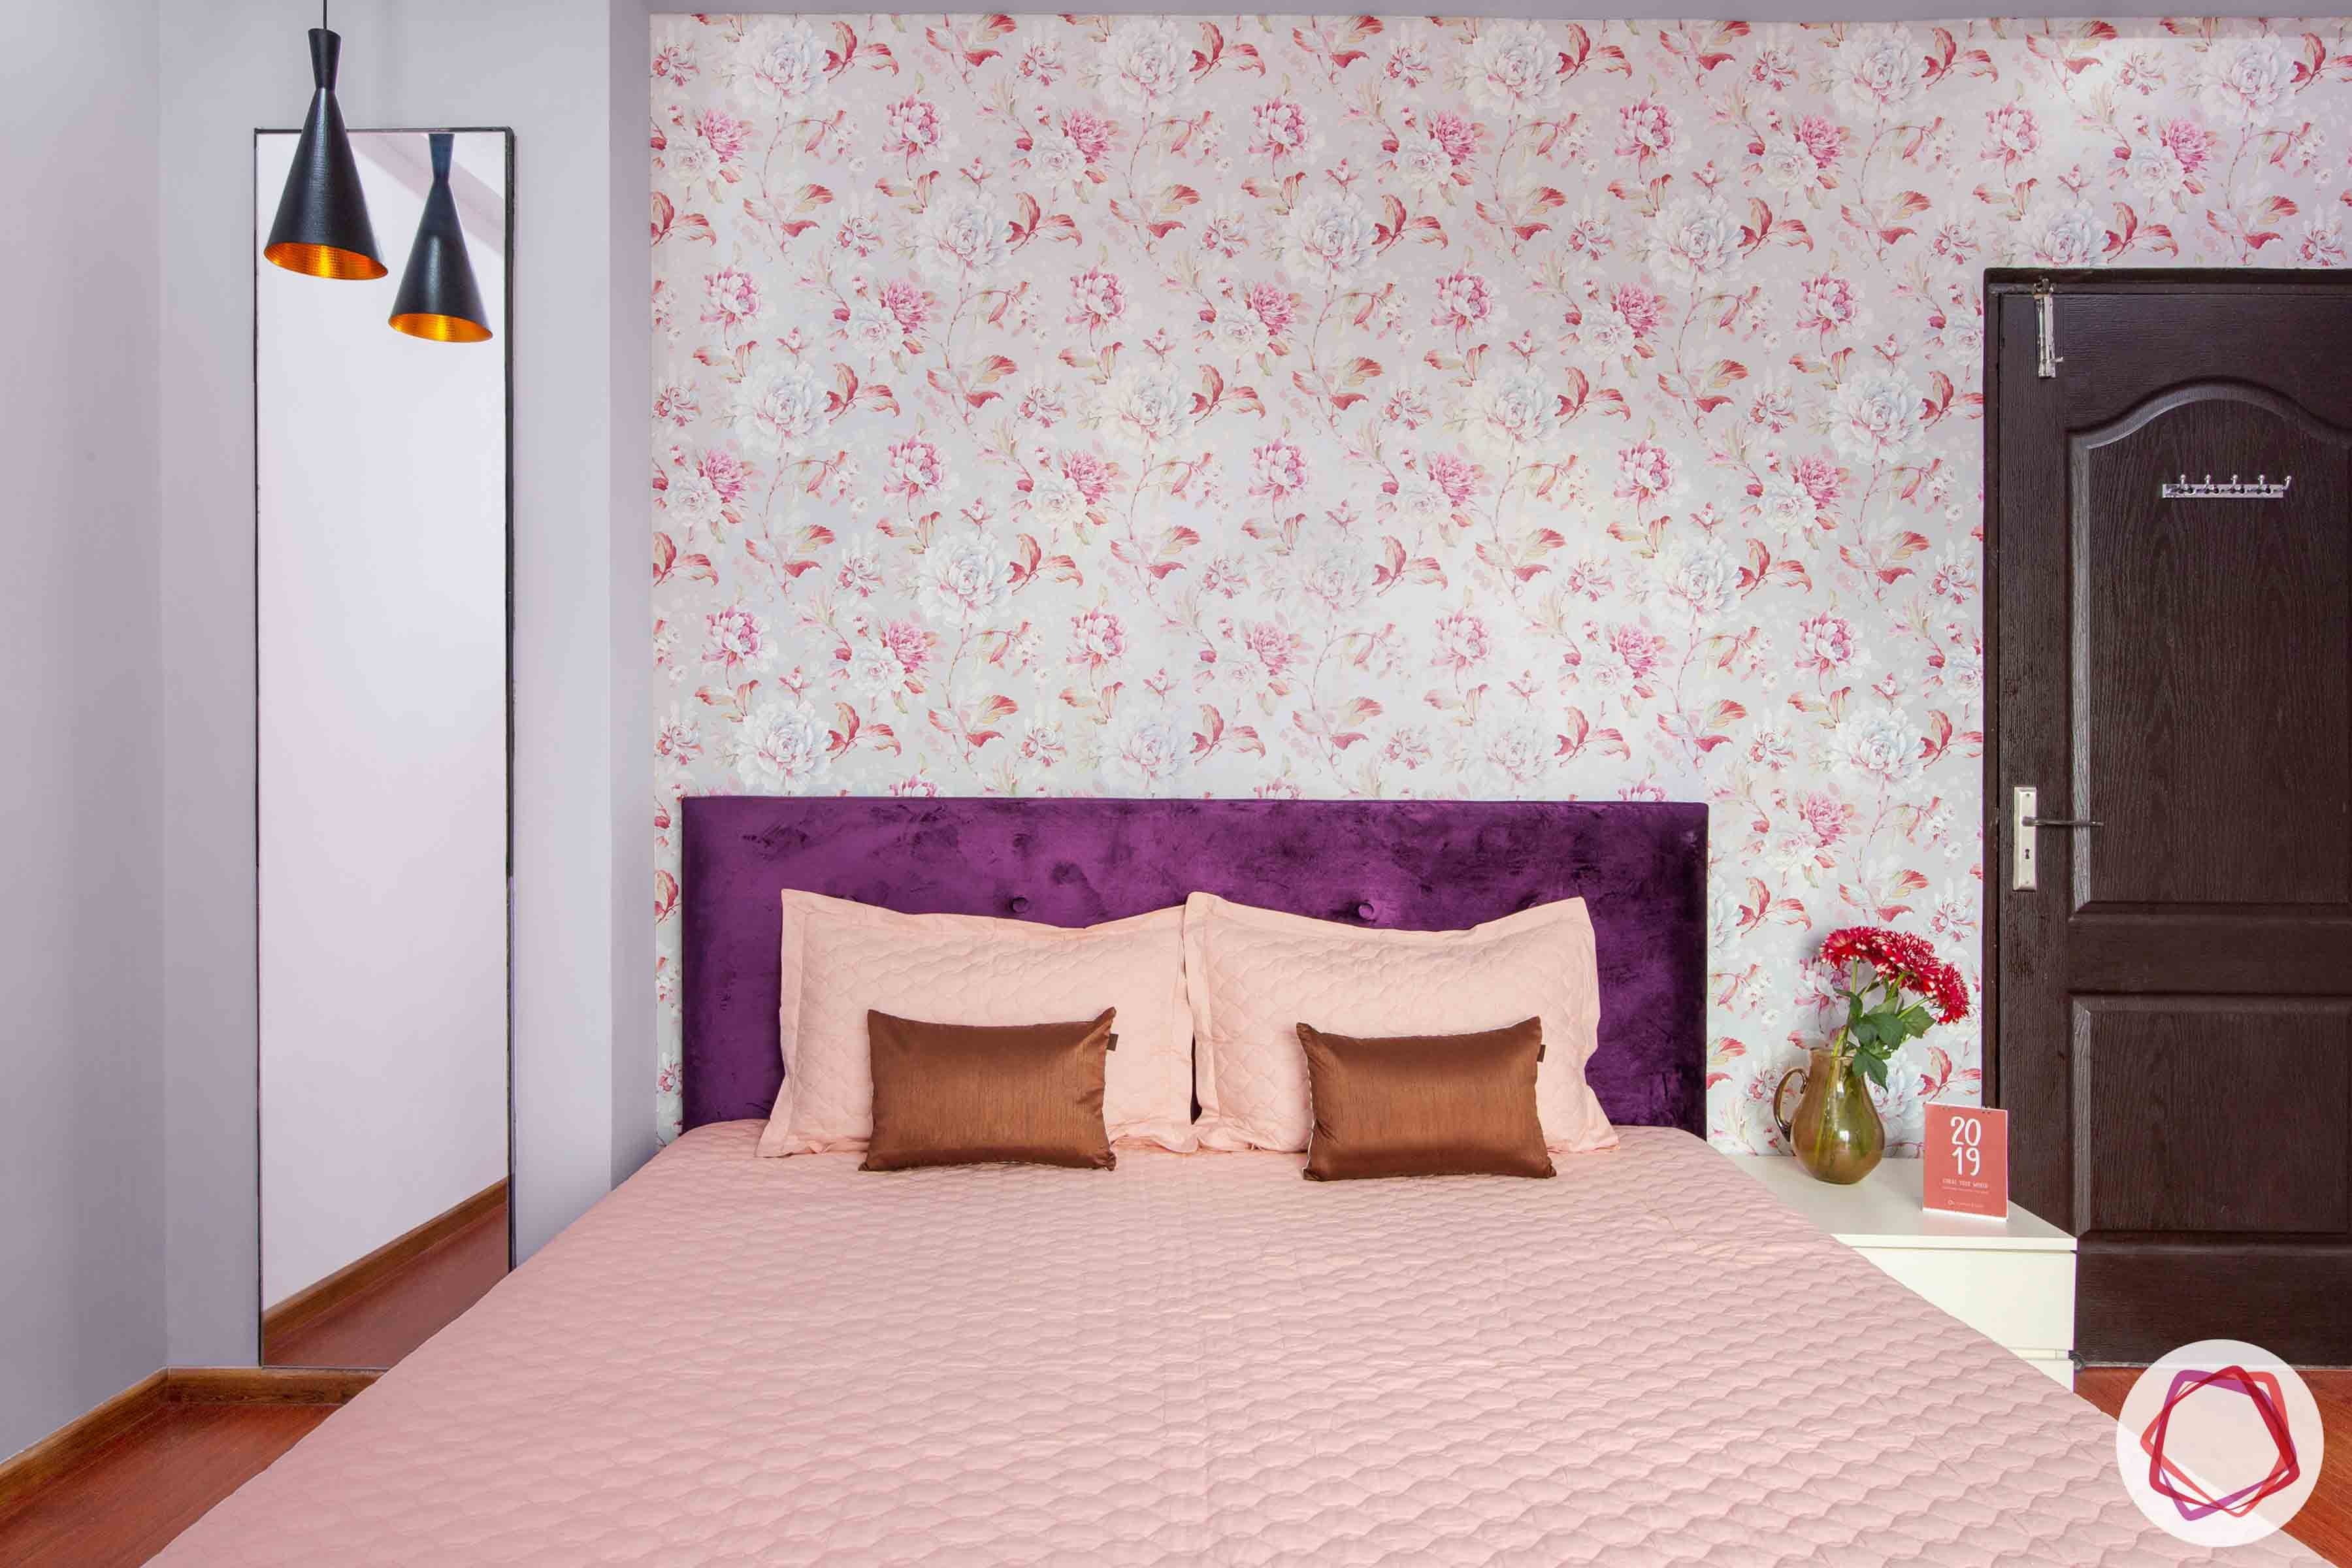 3bhk flat interior design-floral wallpaper designs-purple headboard designs-dressing mirror designs